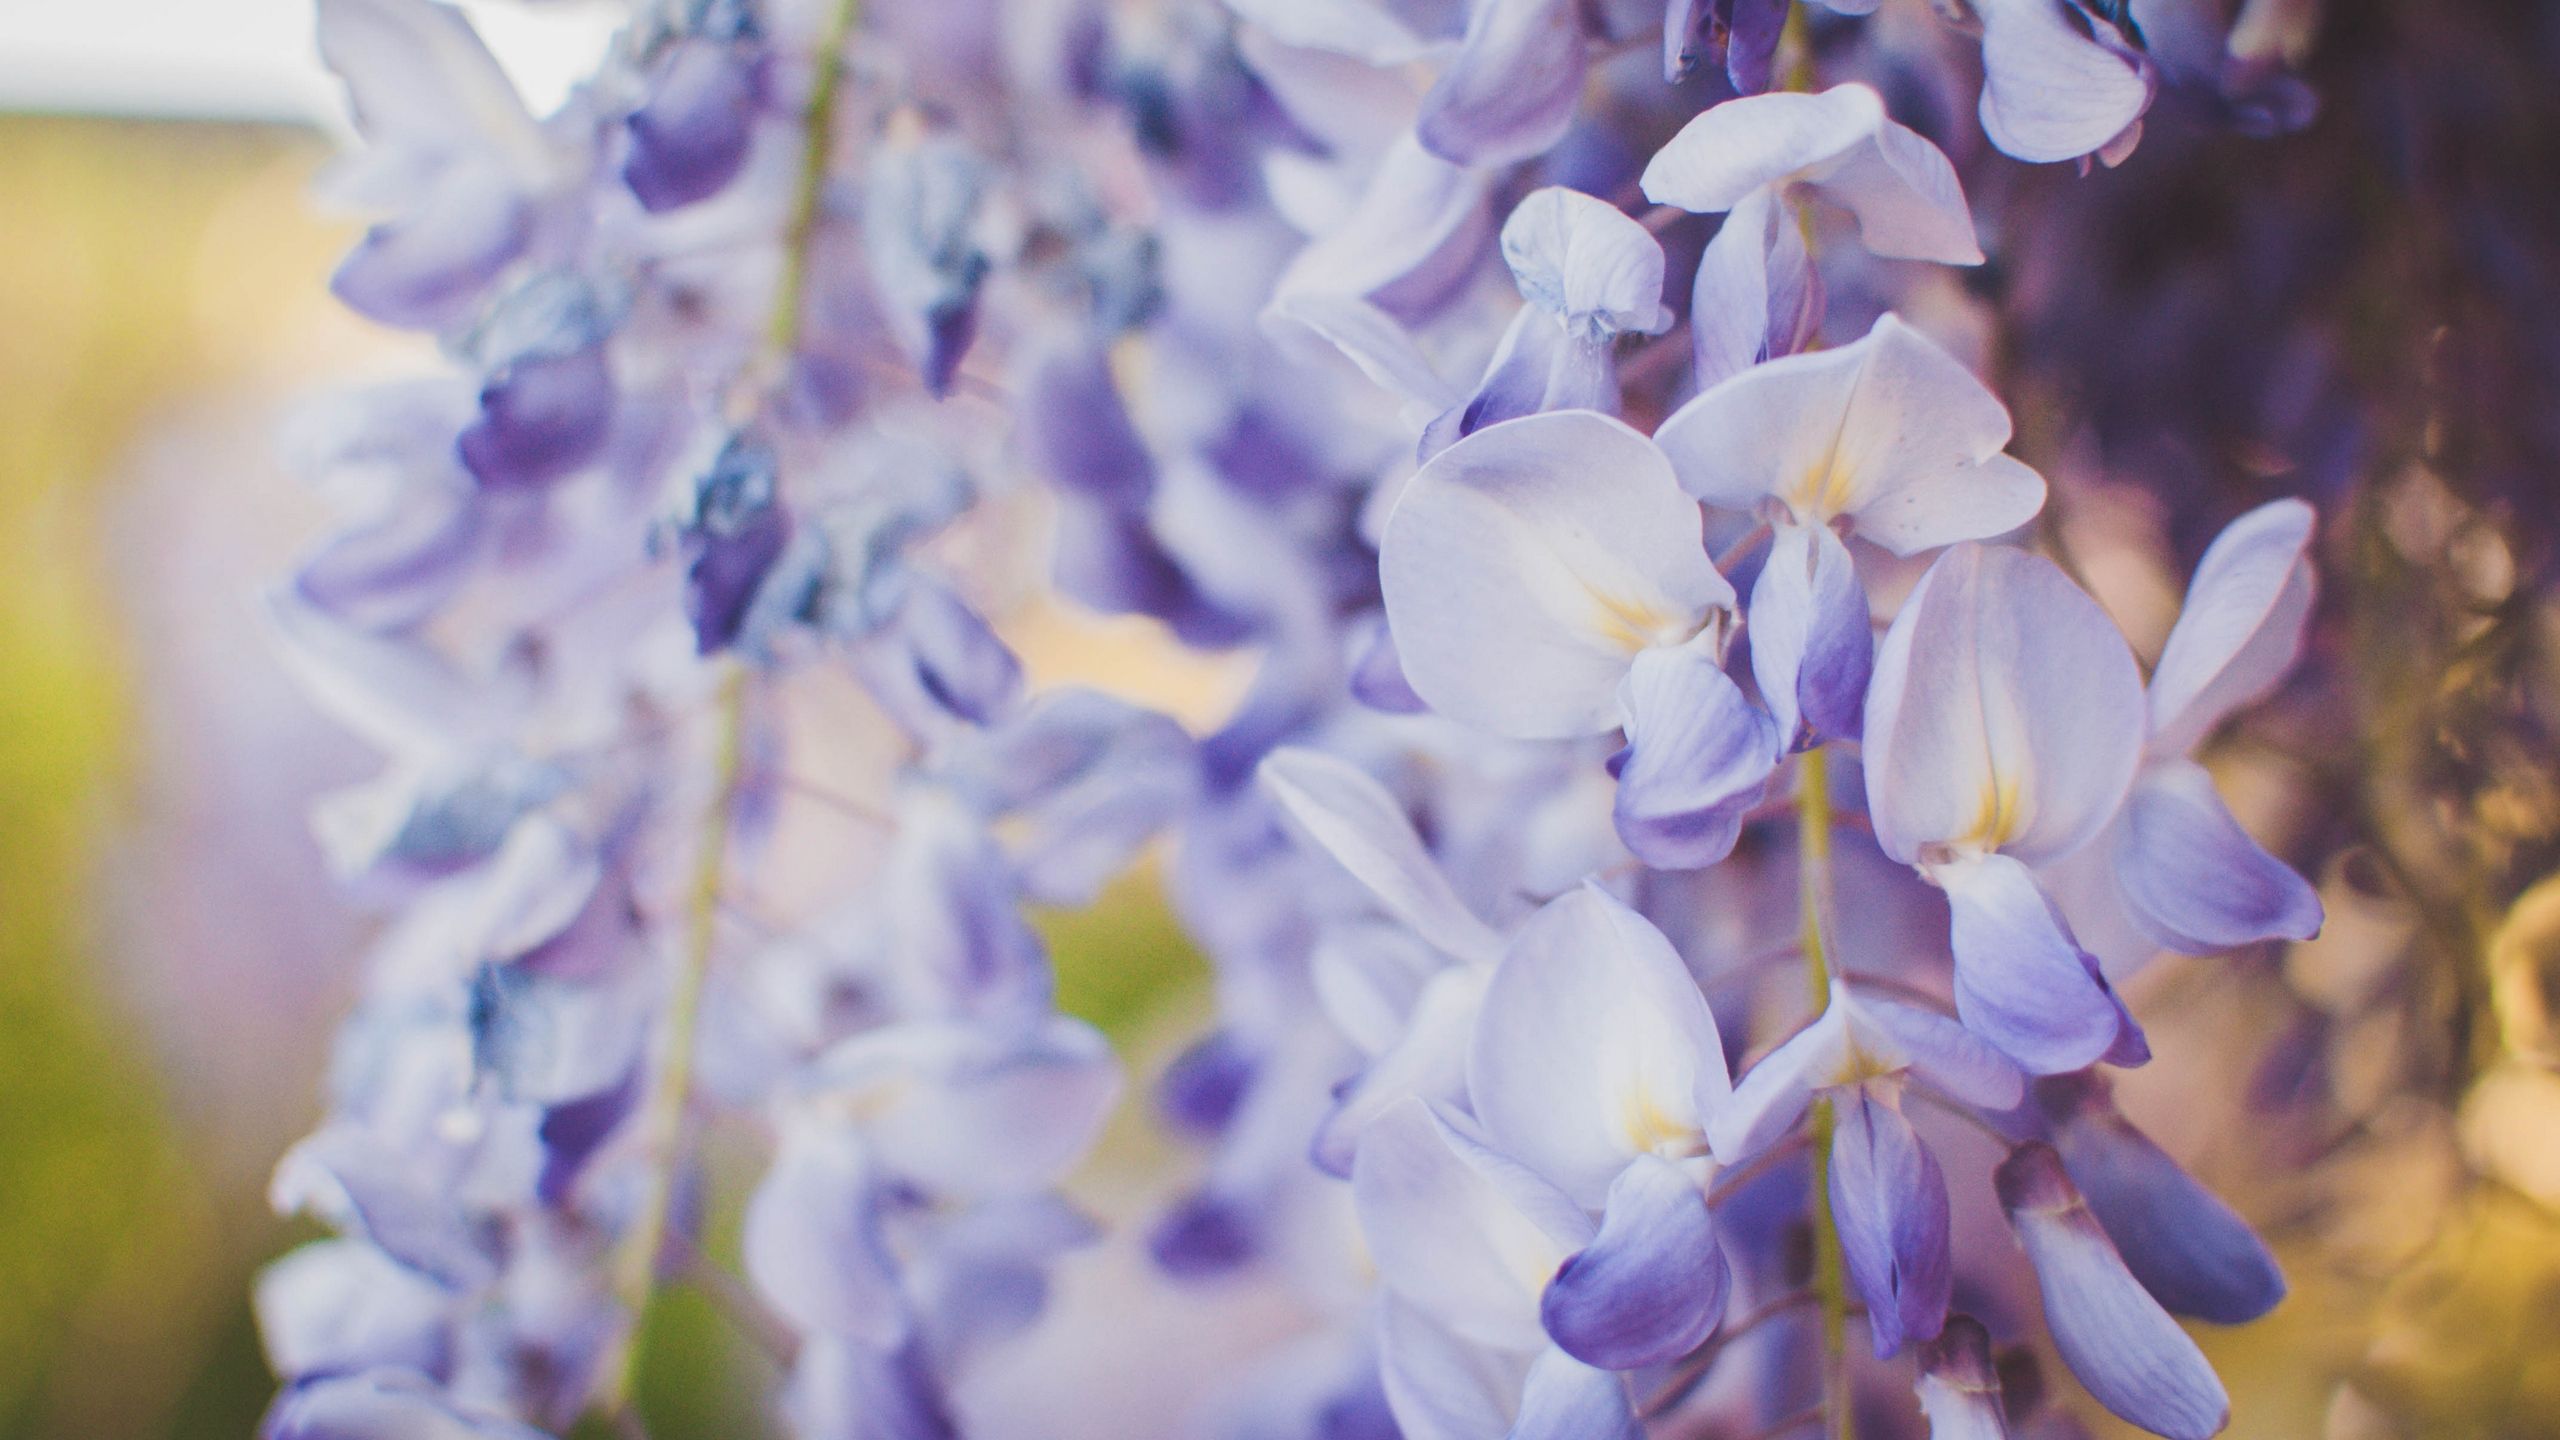 Download wallpaper 2560x1440 wisteria, flowers, purple, closeup